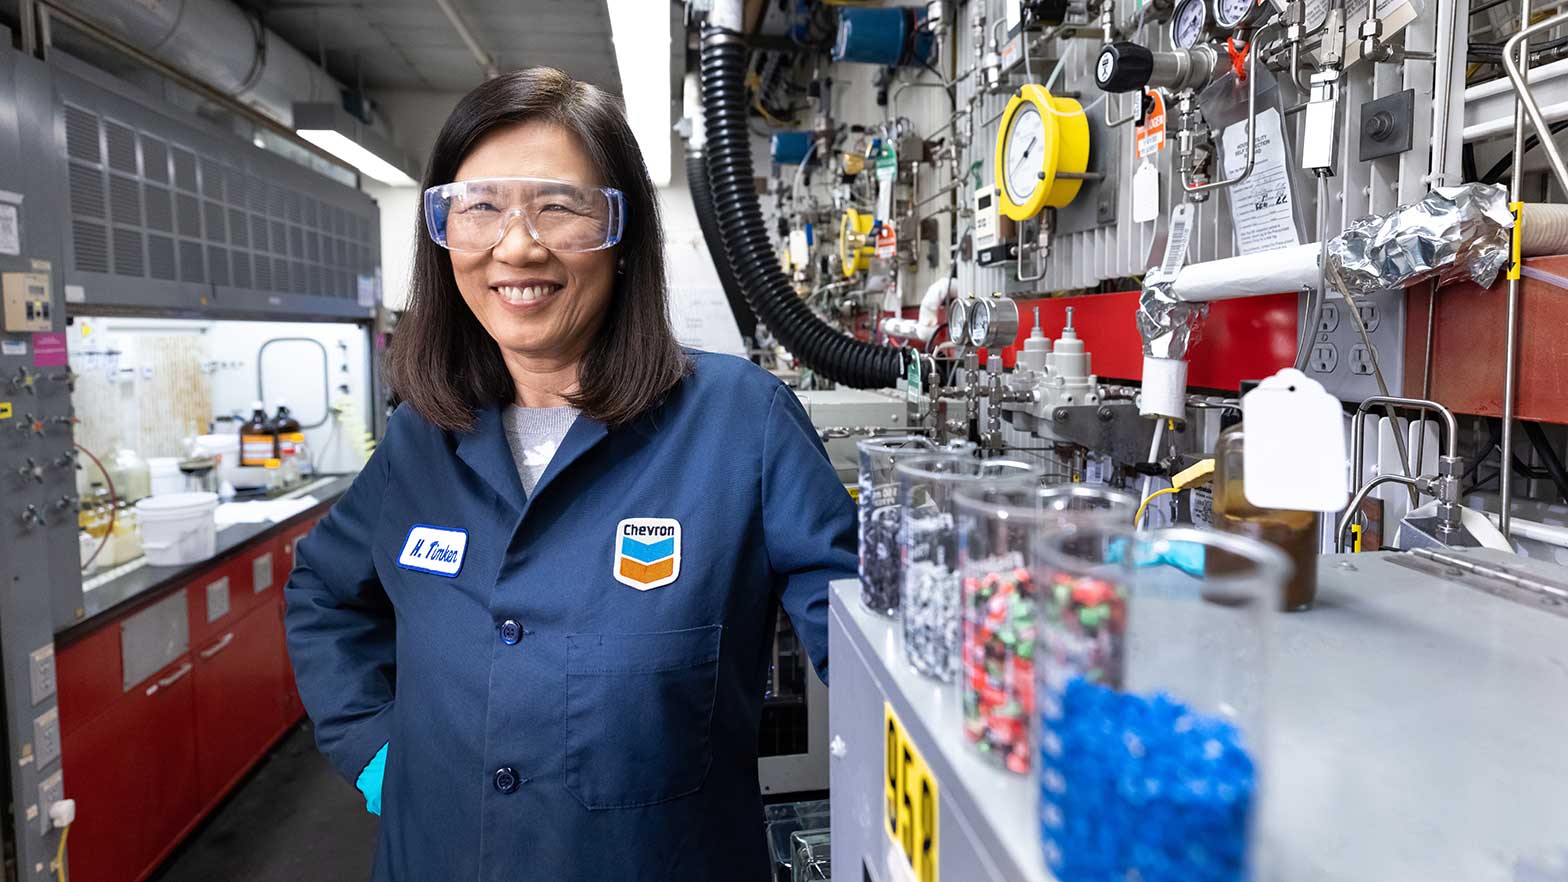 hye-kyung timken: principal scientist, chevron technical center, next to beakers